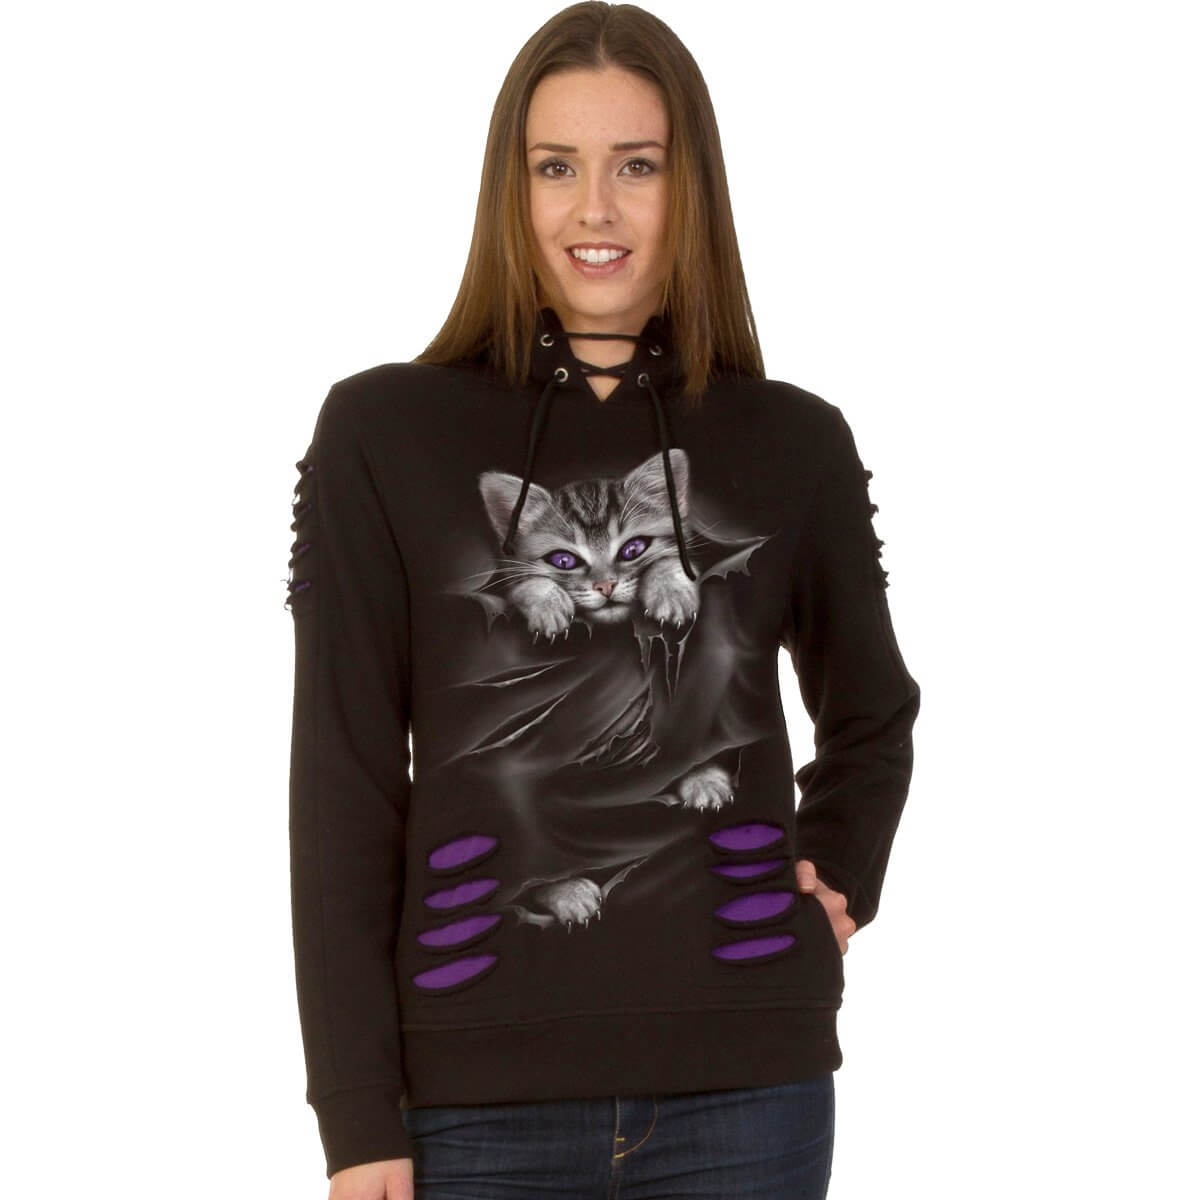 goth sweater with kitten design